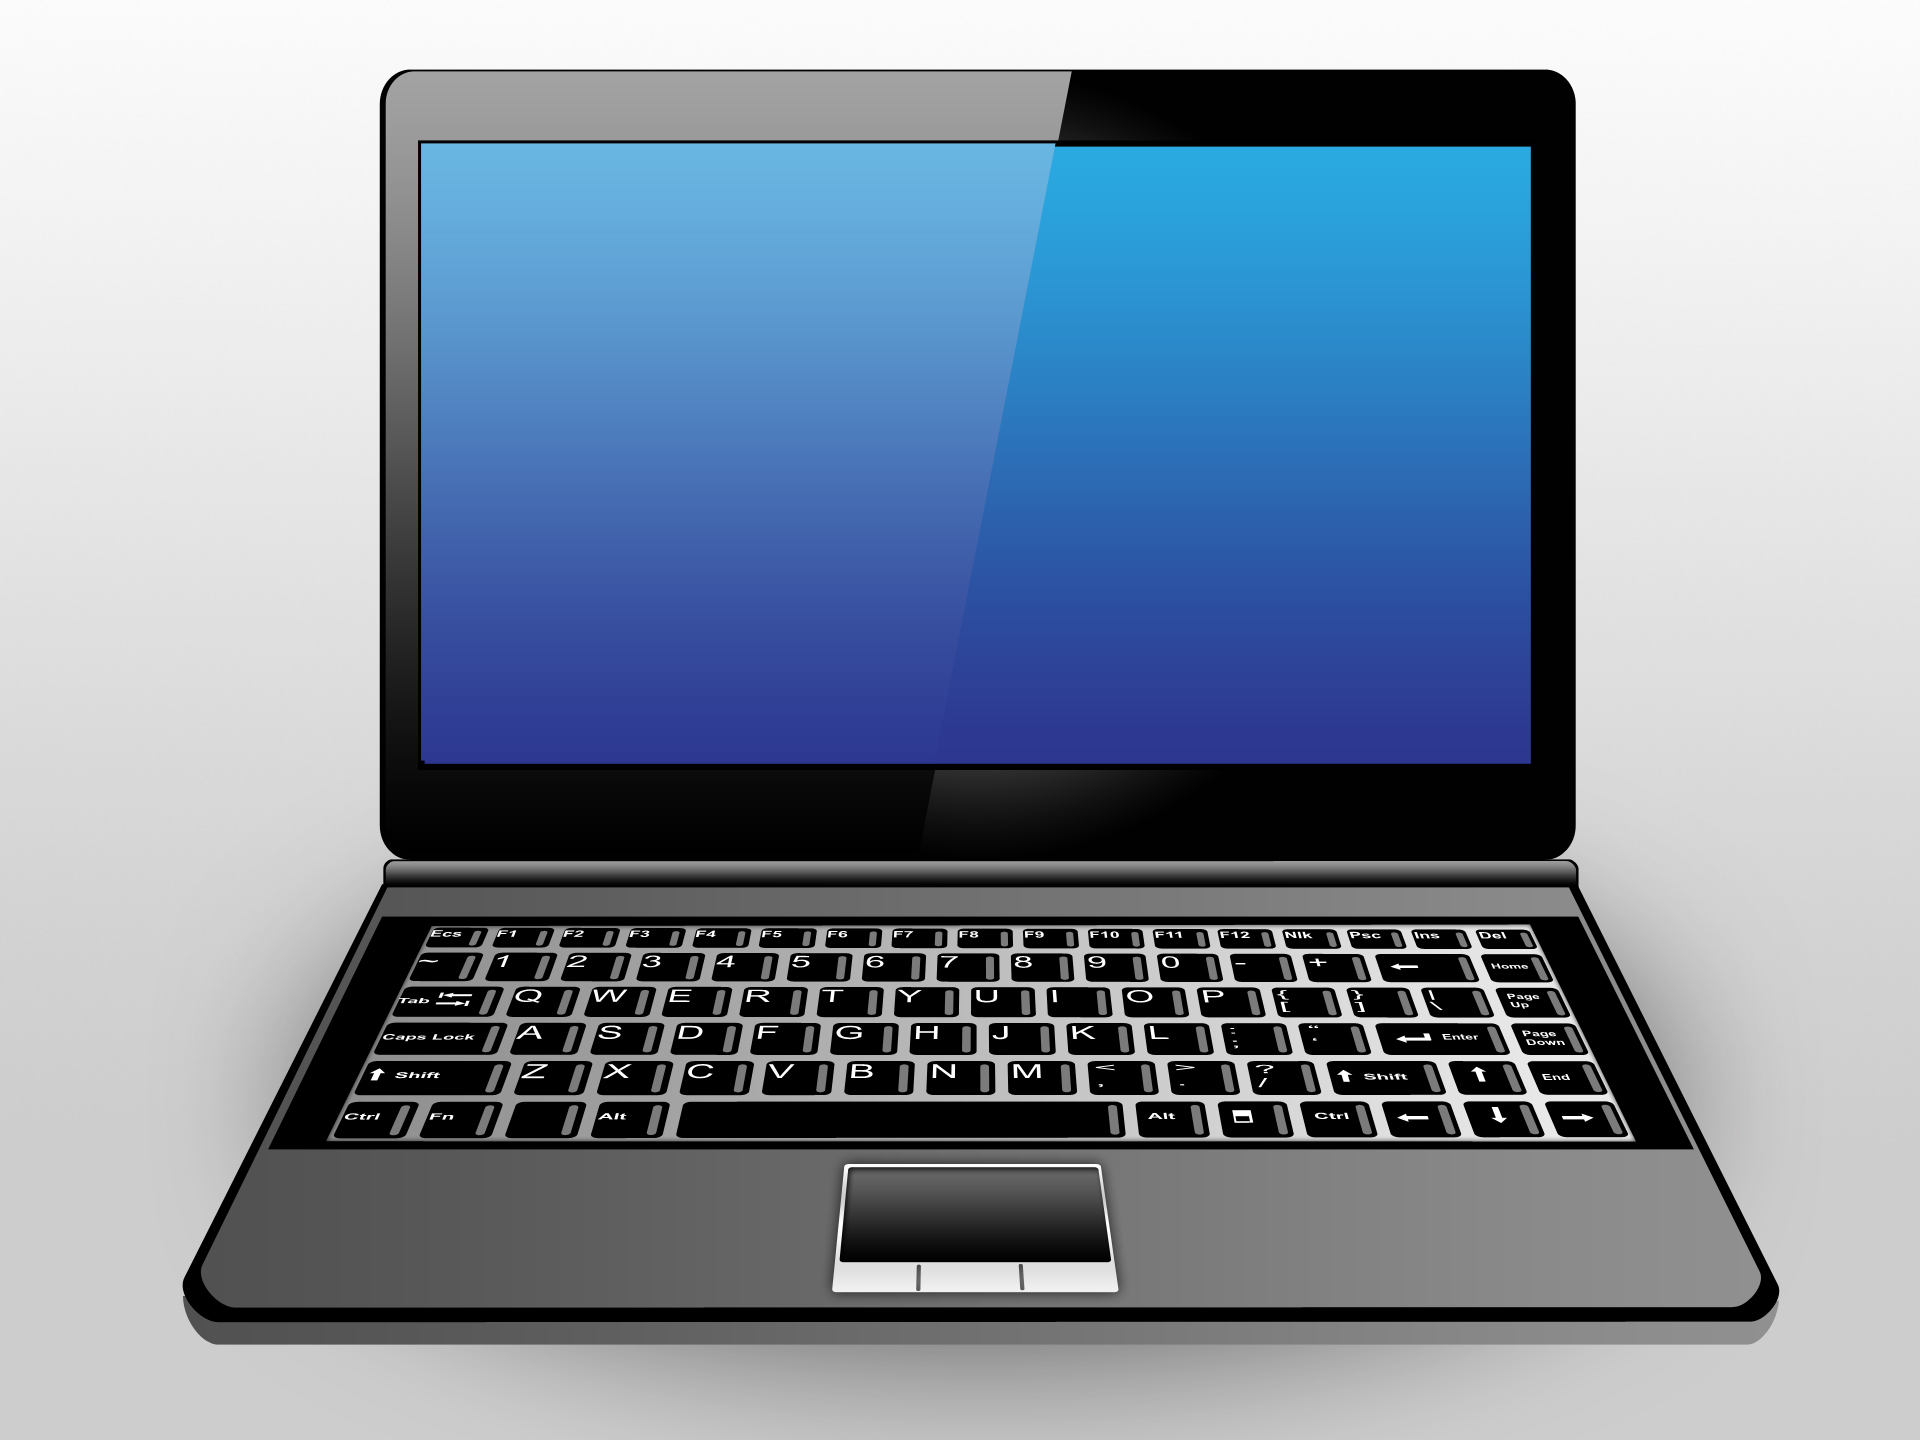 Laptop Bag Icon PNG Images, Vectors Free Download - Pngtree